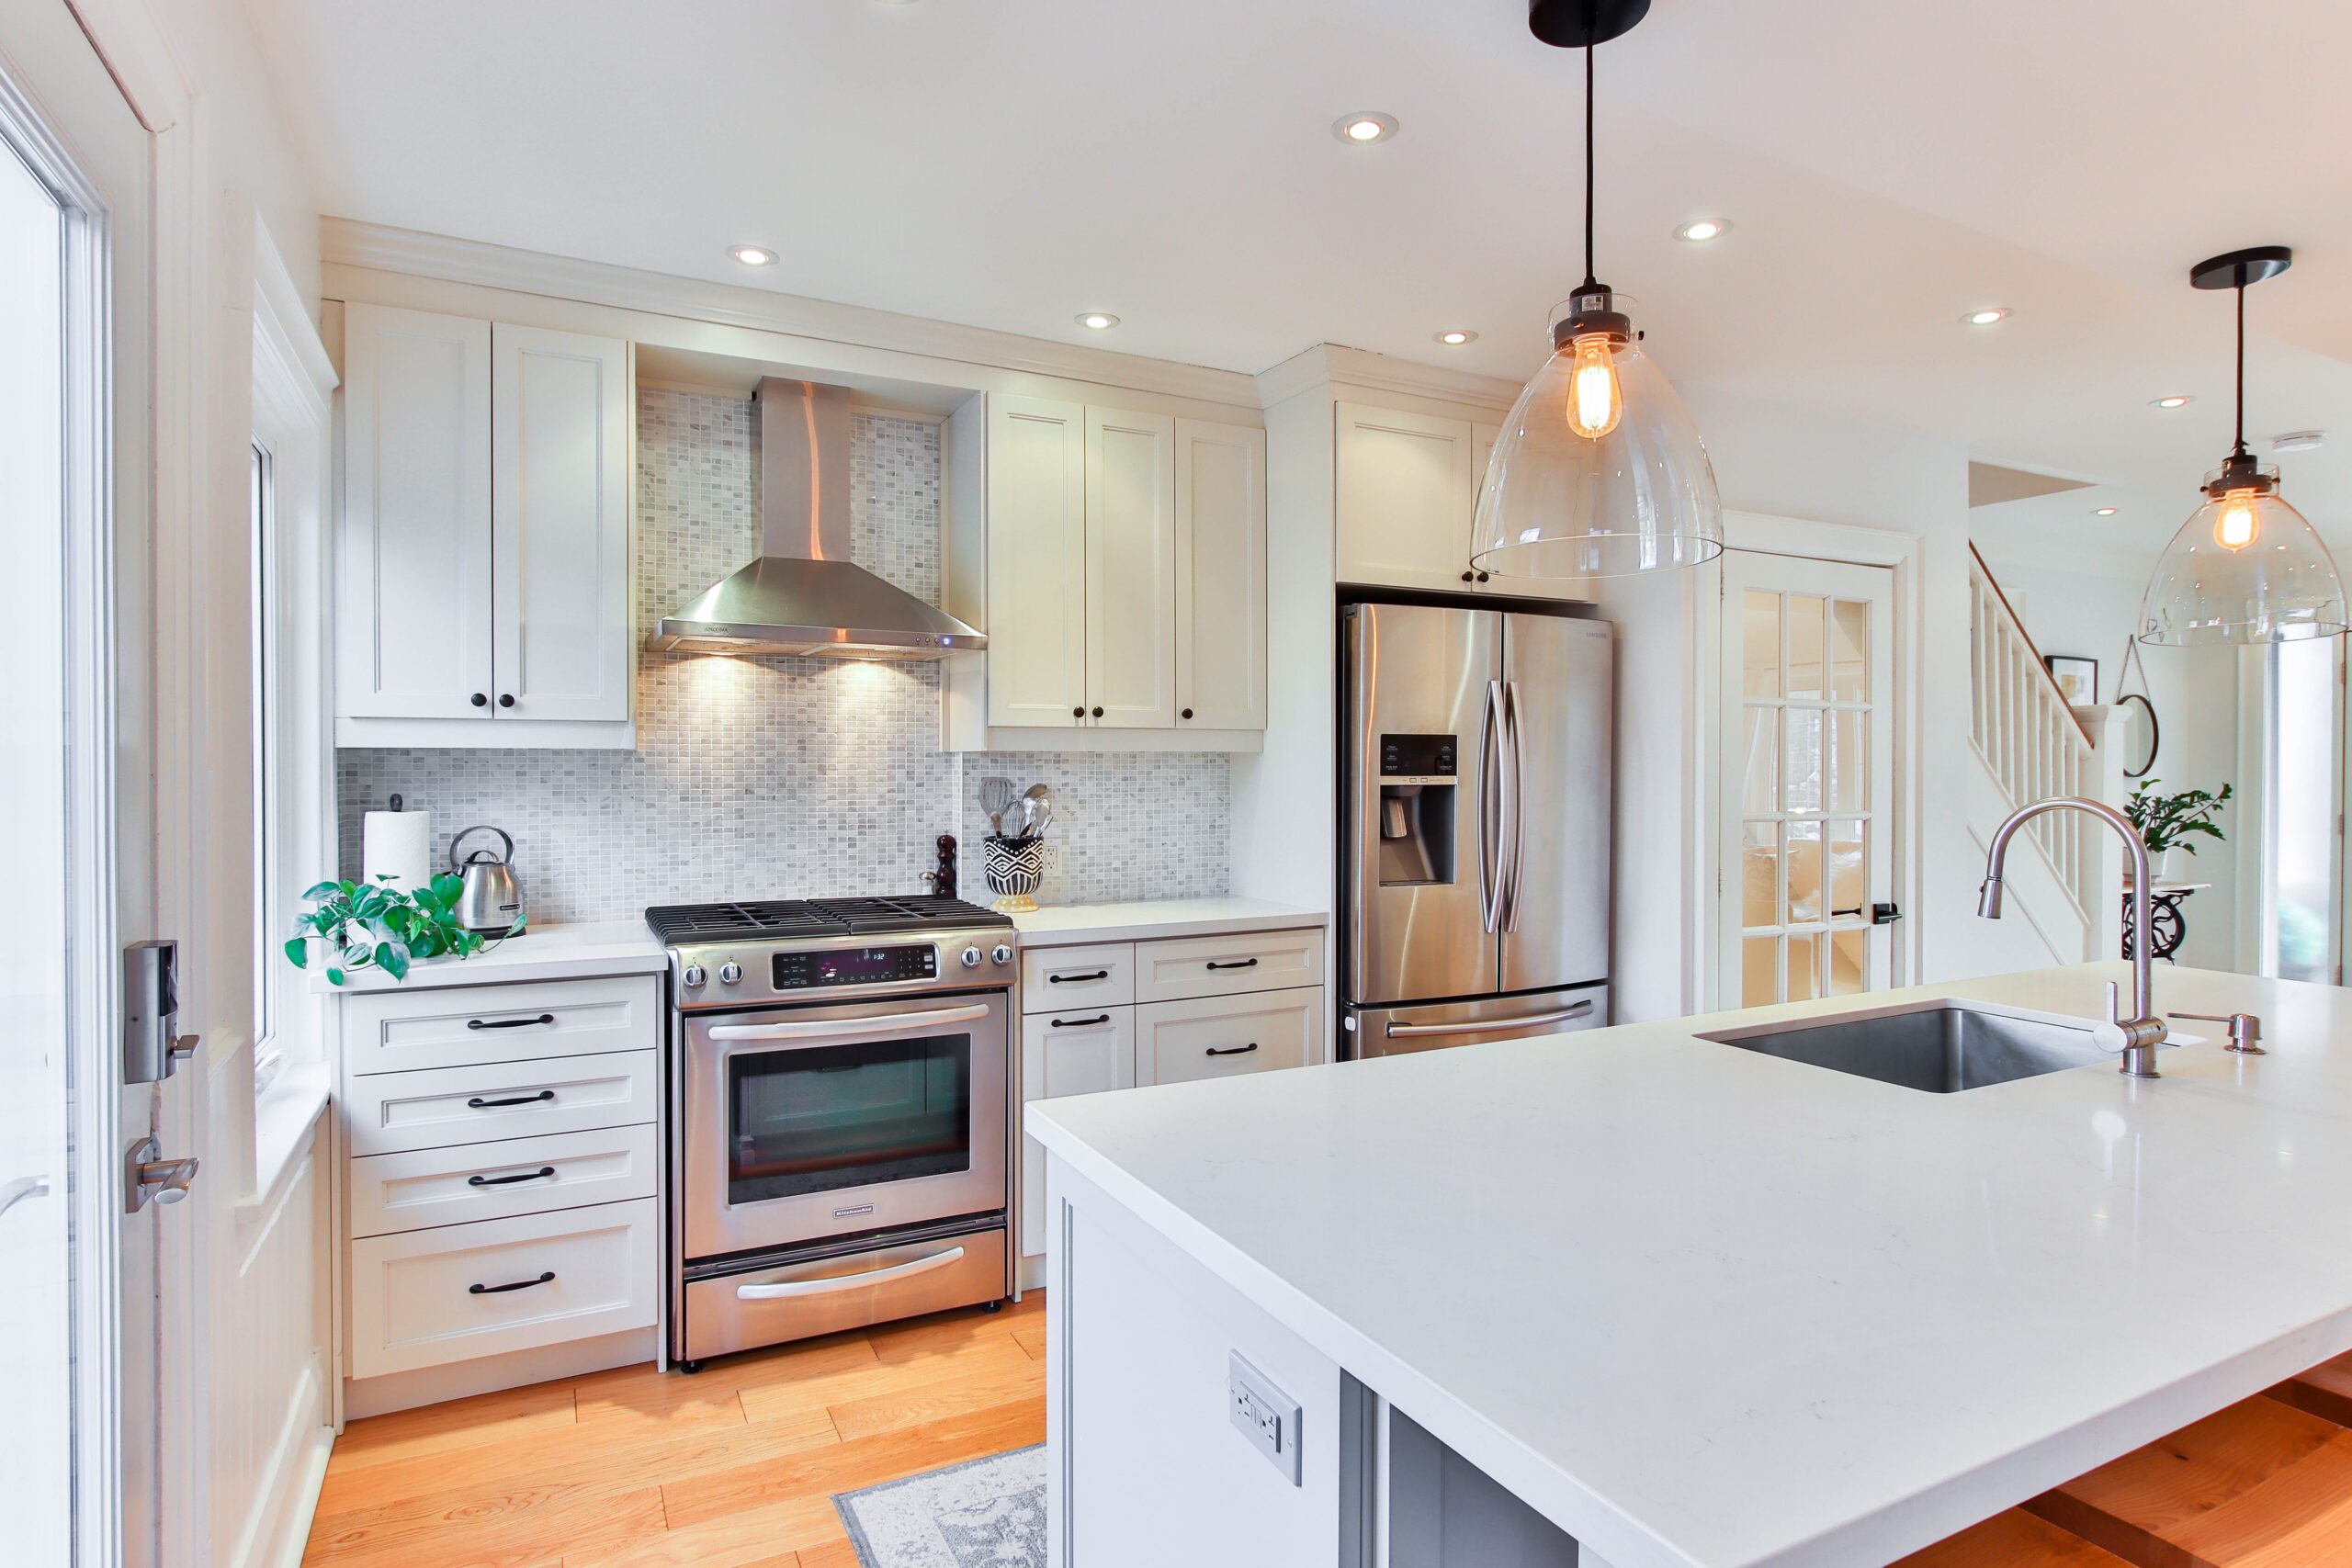 Rental property scratch and dent kitchen appliances